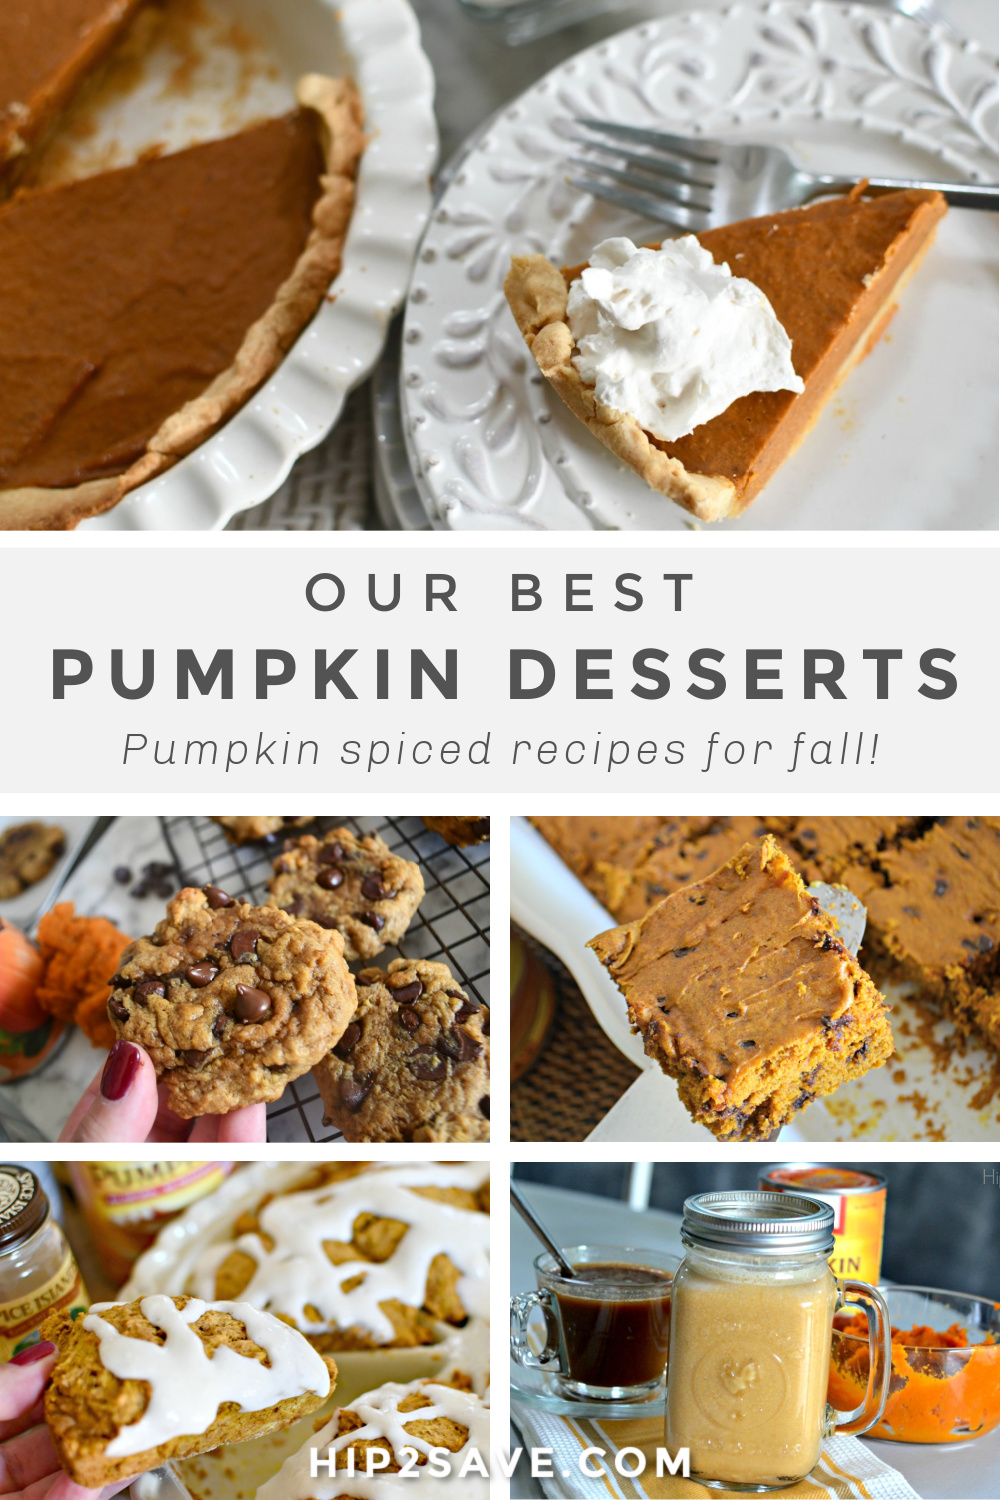 16 of the Best Pumpkin Dessert Recipes | Pie, Bread, Cookies, & More